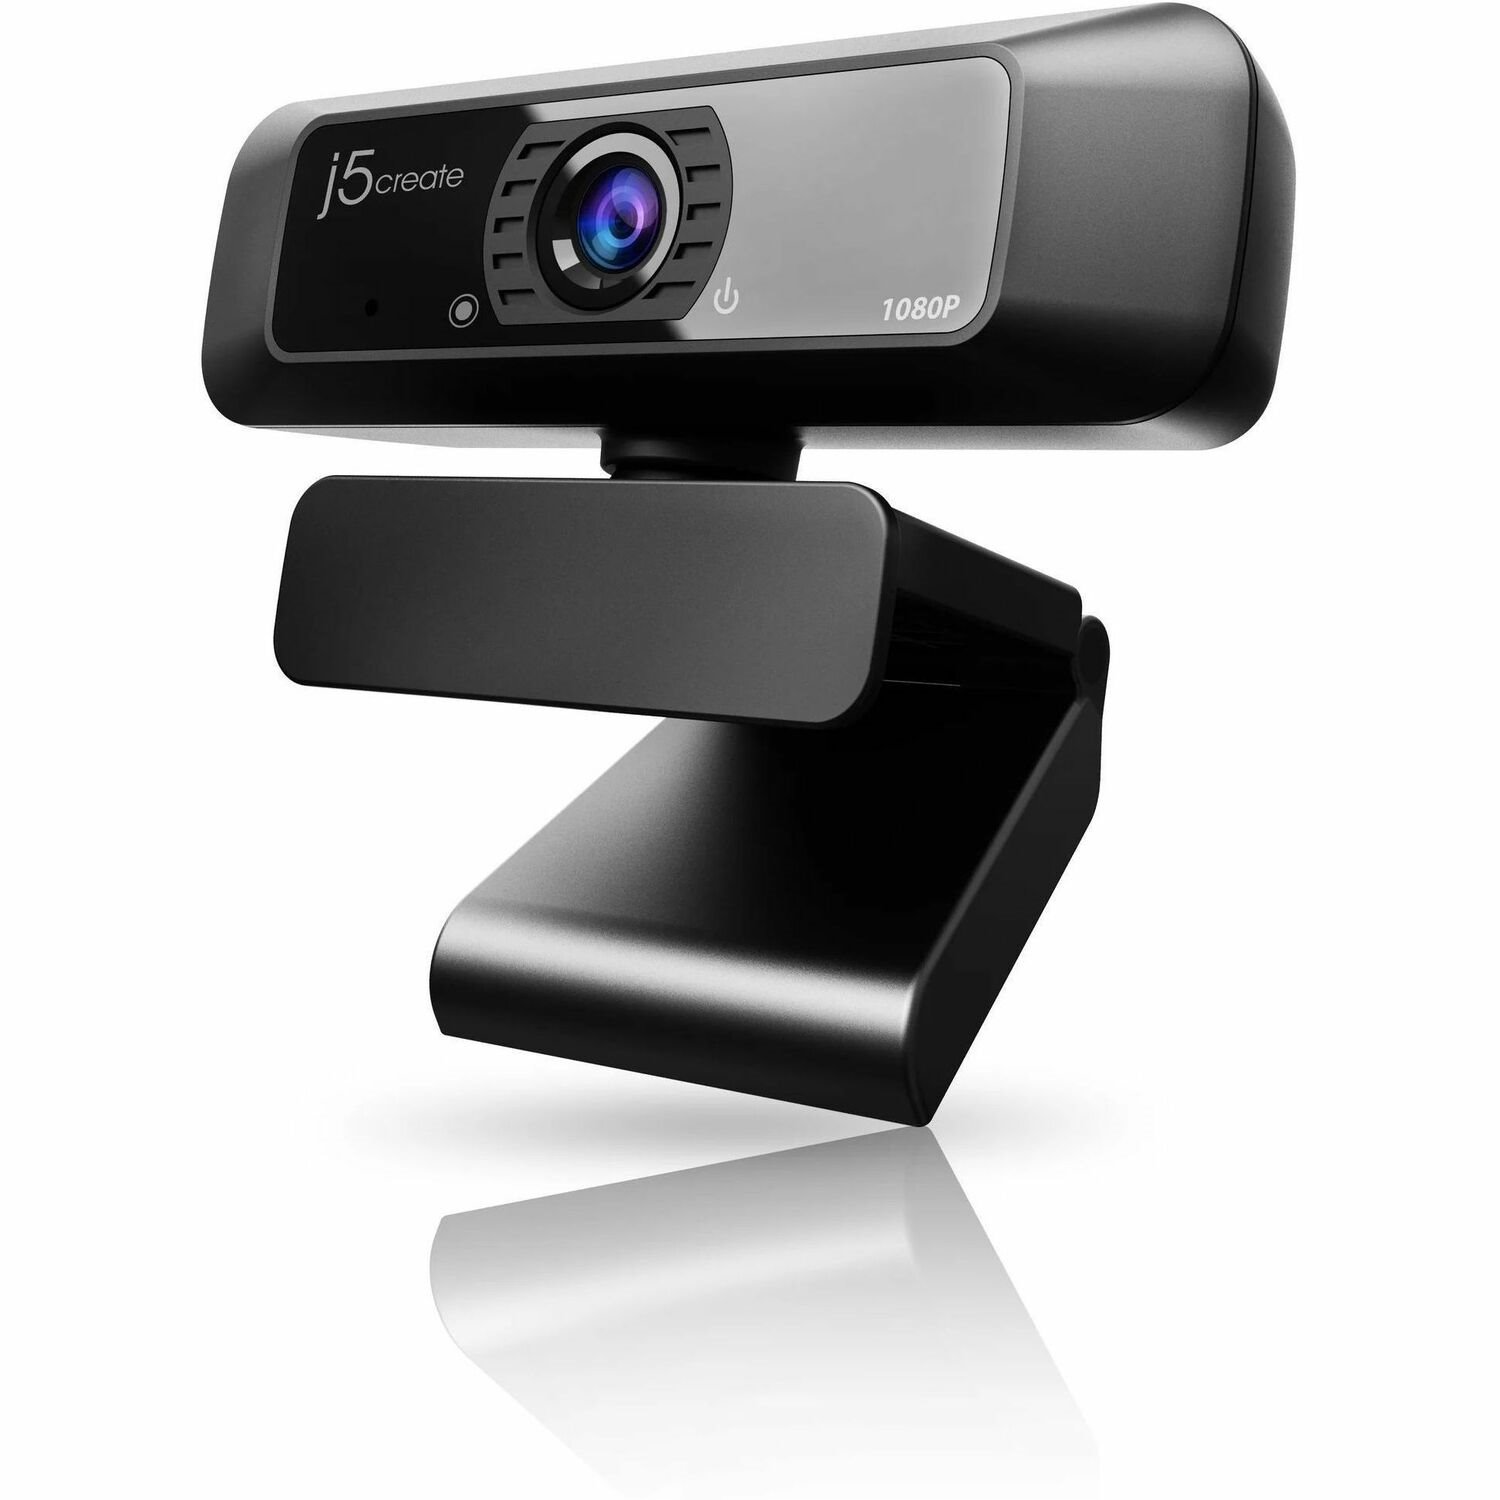 j5create JVCU100 Webcam - 2 Megapixel - 30 fps - Black - USB 2.0 Type A - 1 Pack(s)